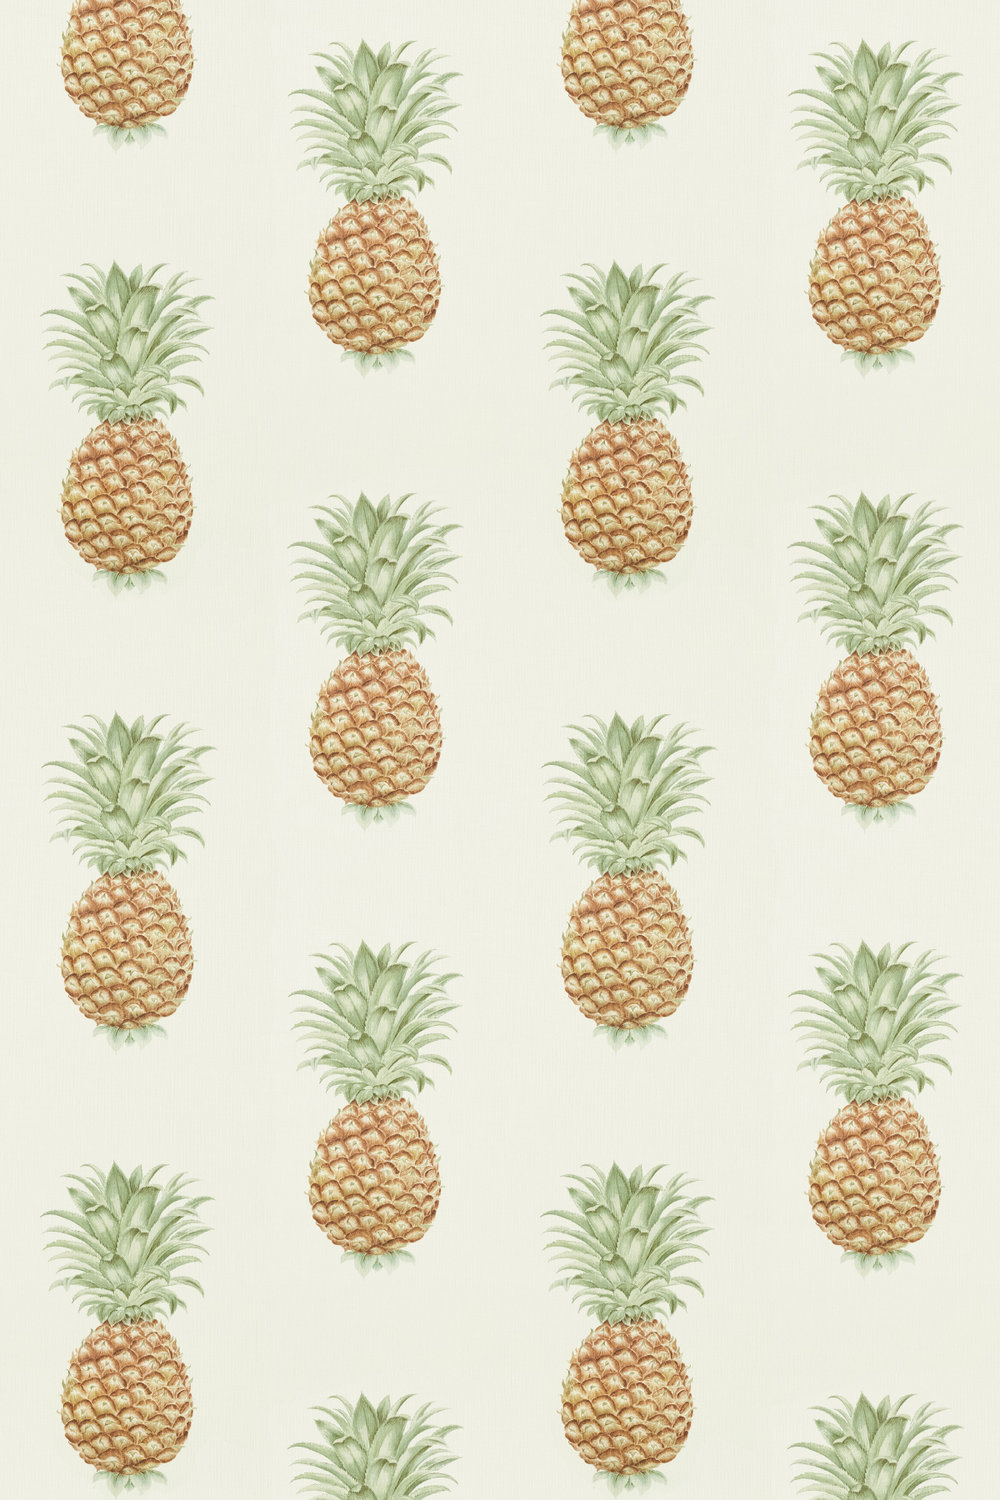 Pineapple Royale Fabric - Artichoke / Amber - by Sanderson